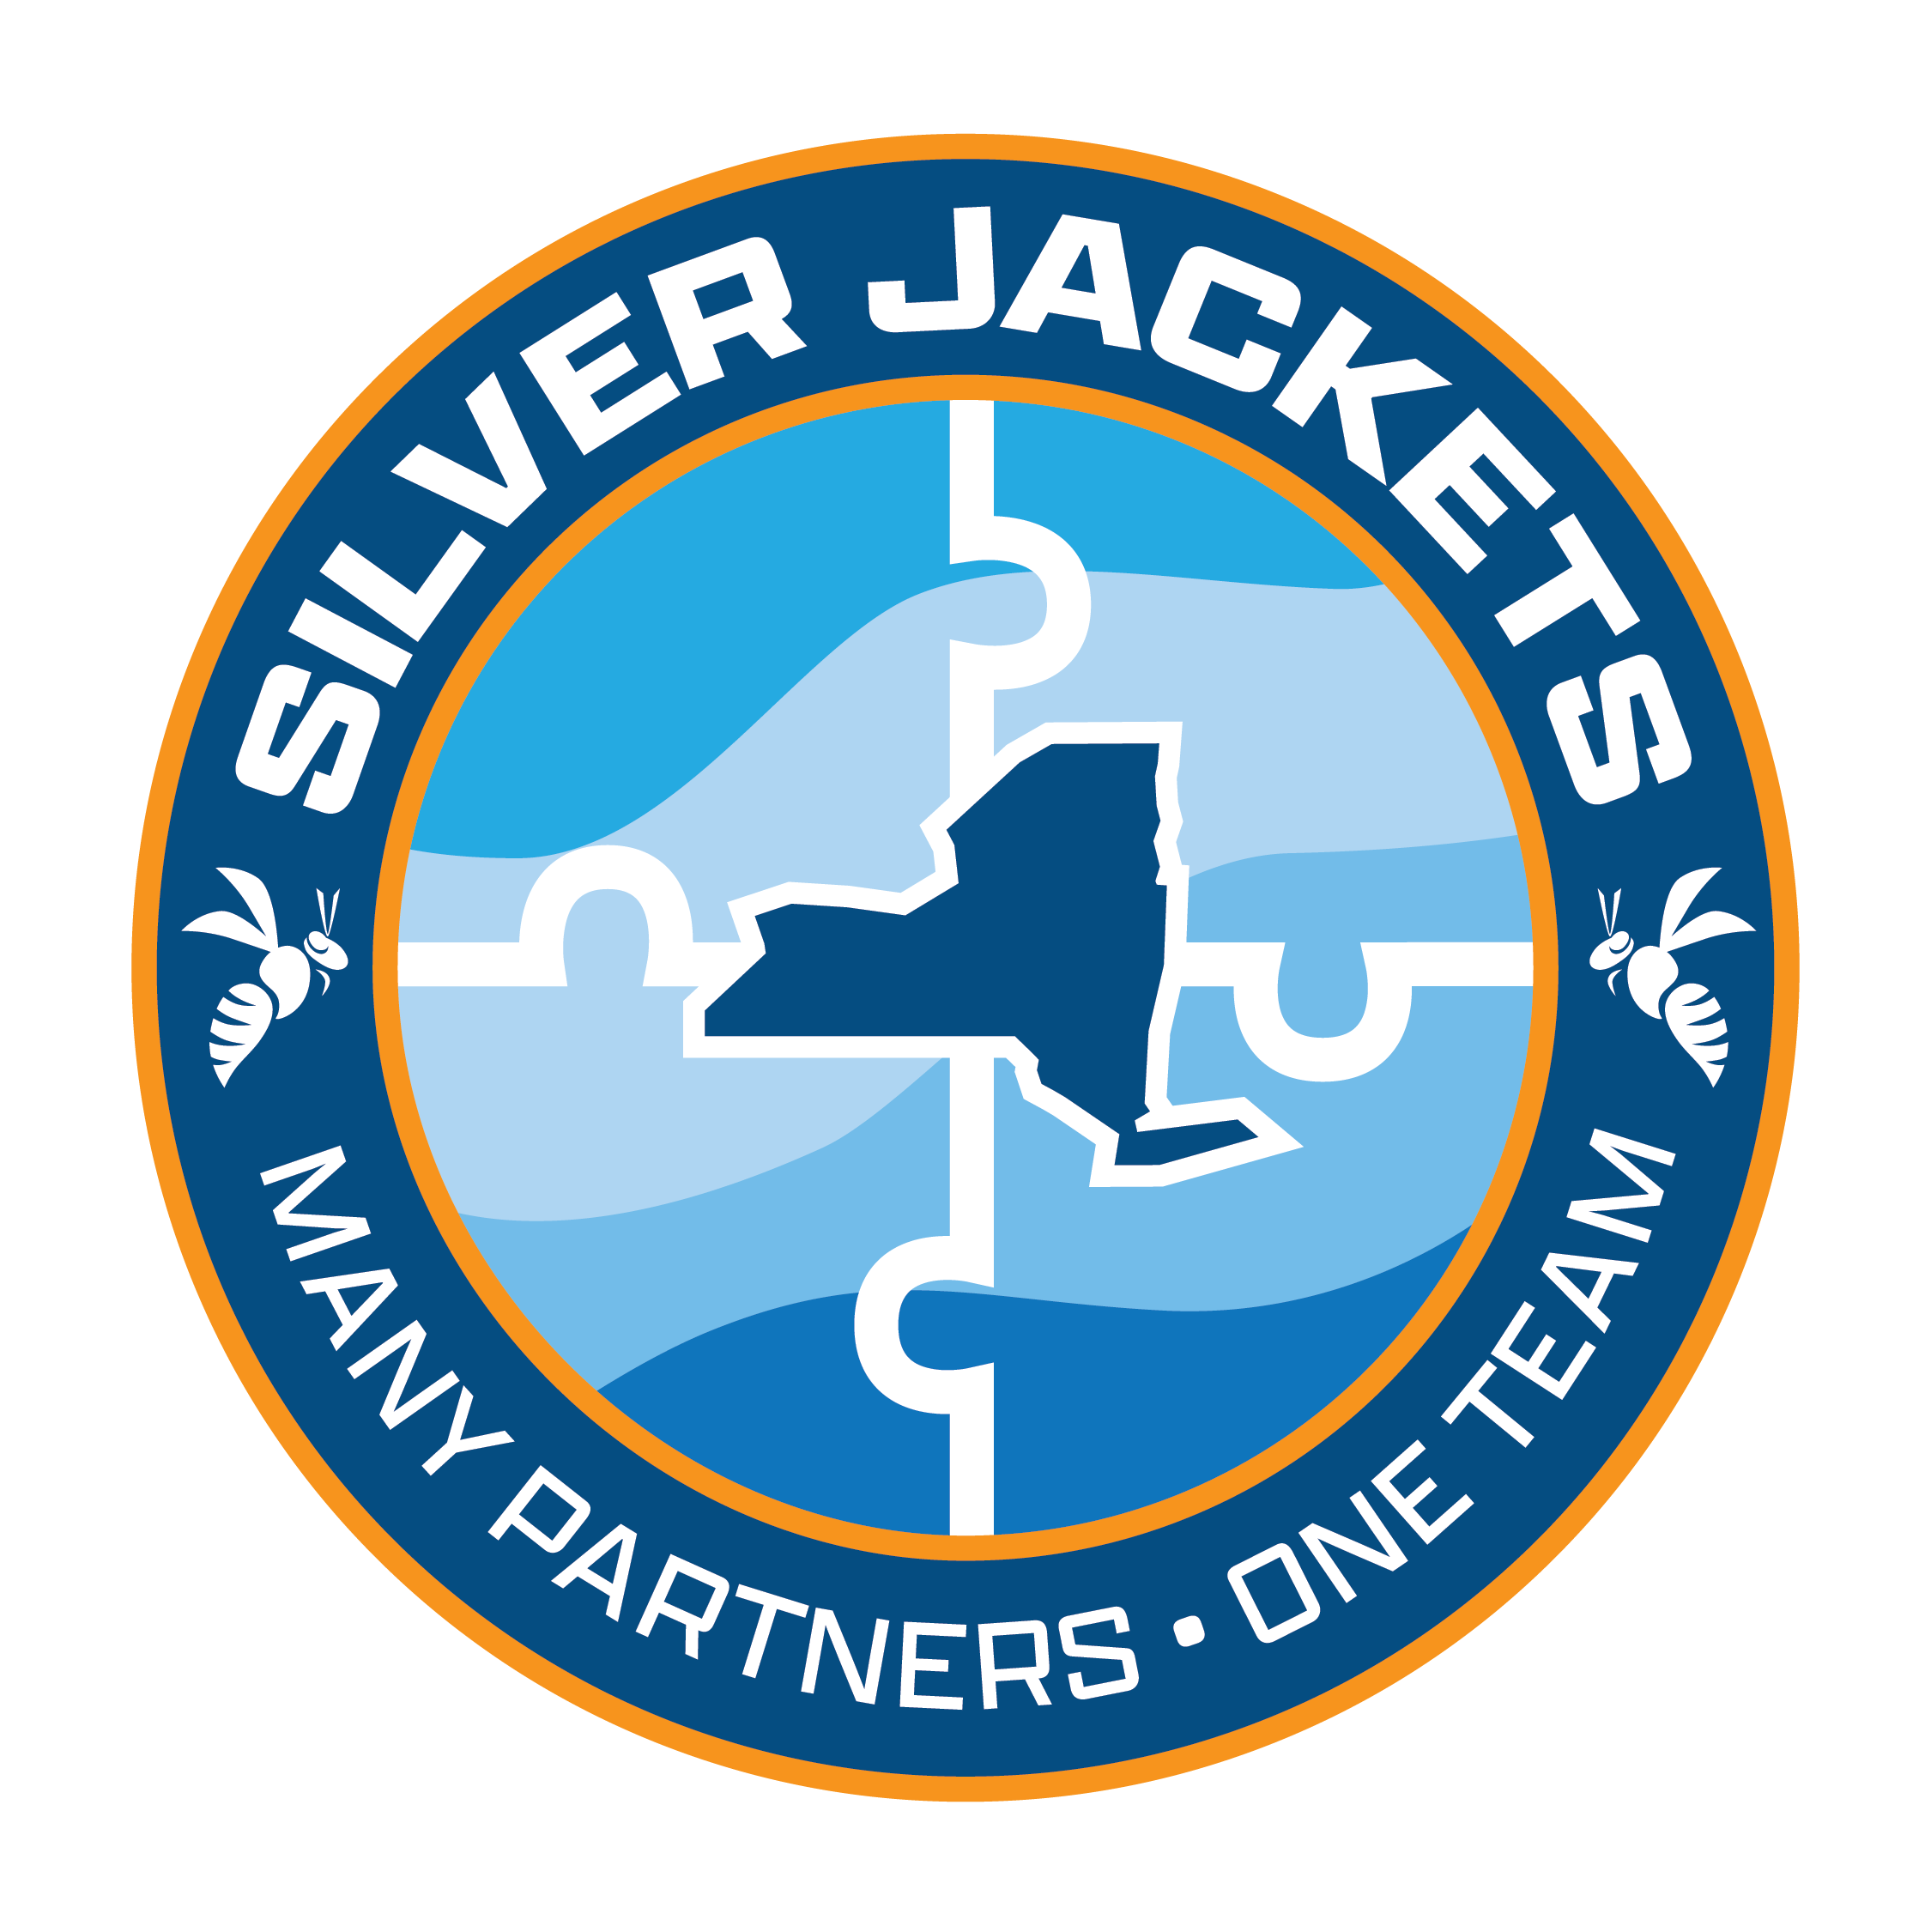 New York Silver Jackets logo